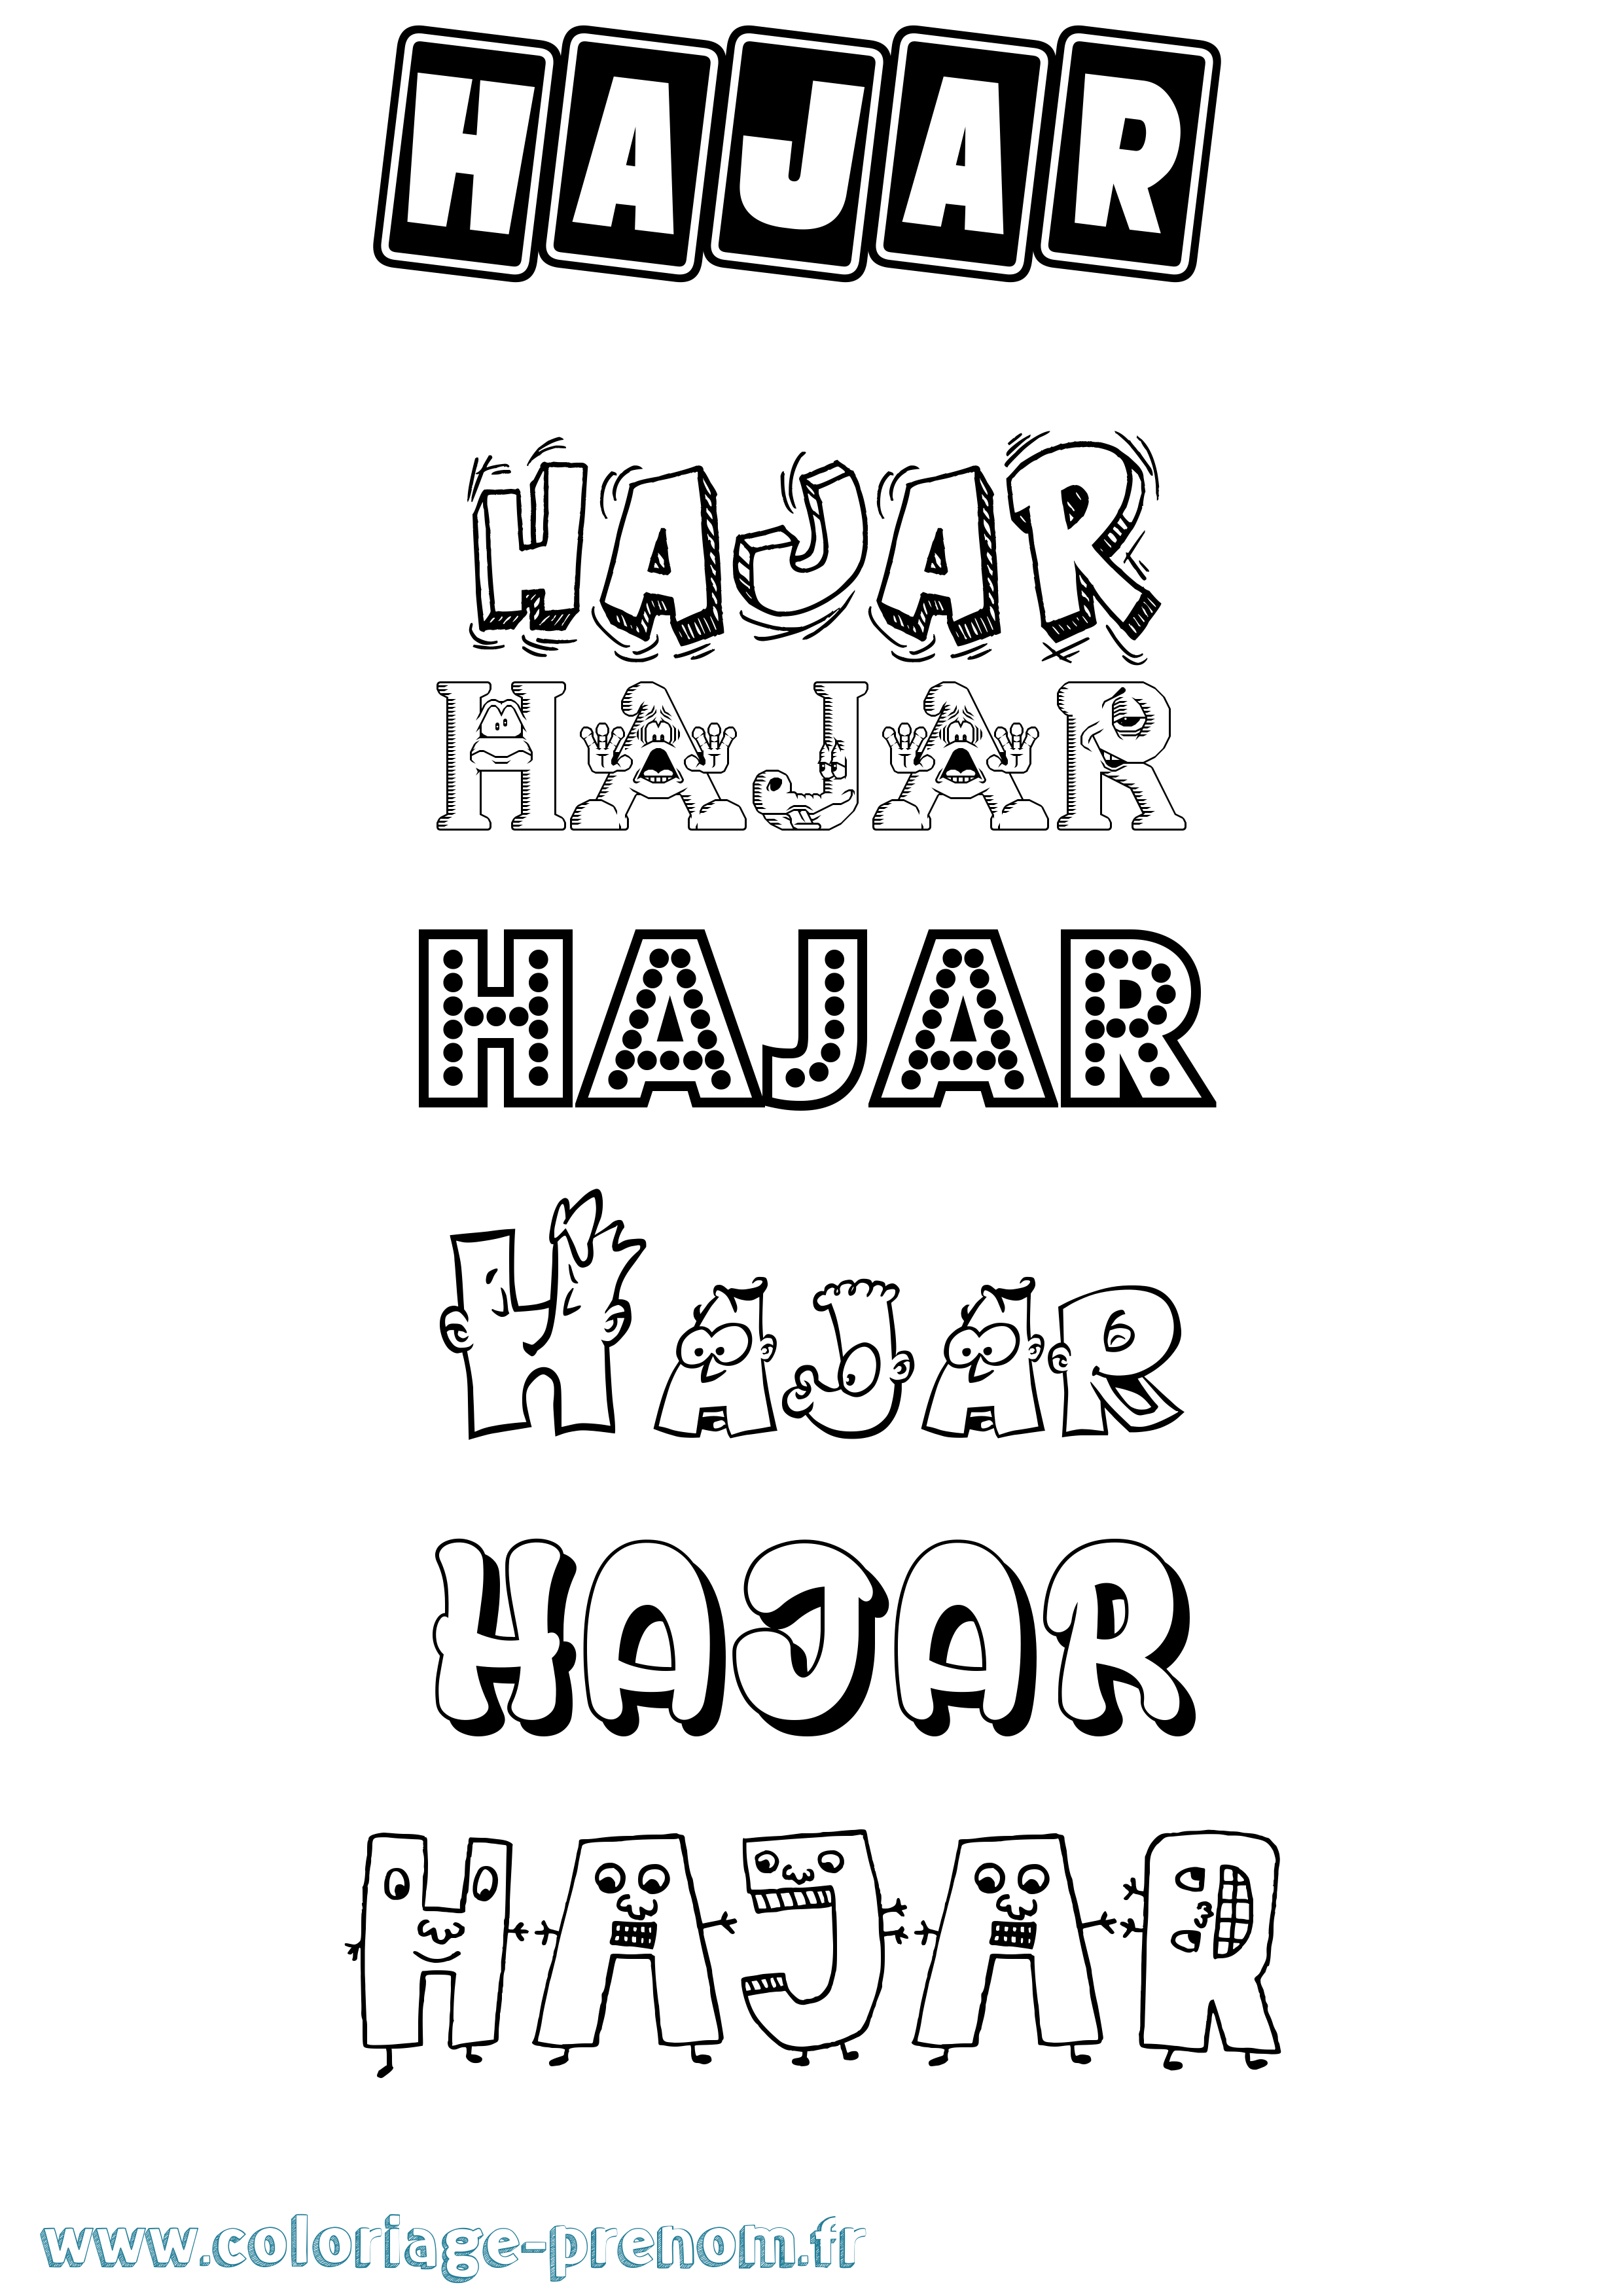 Coloriage prénom Hajar